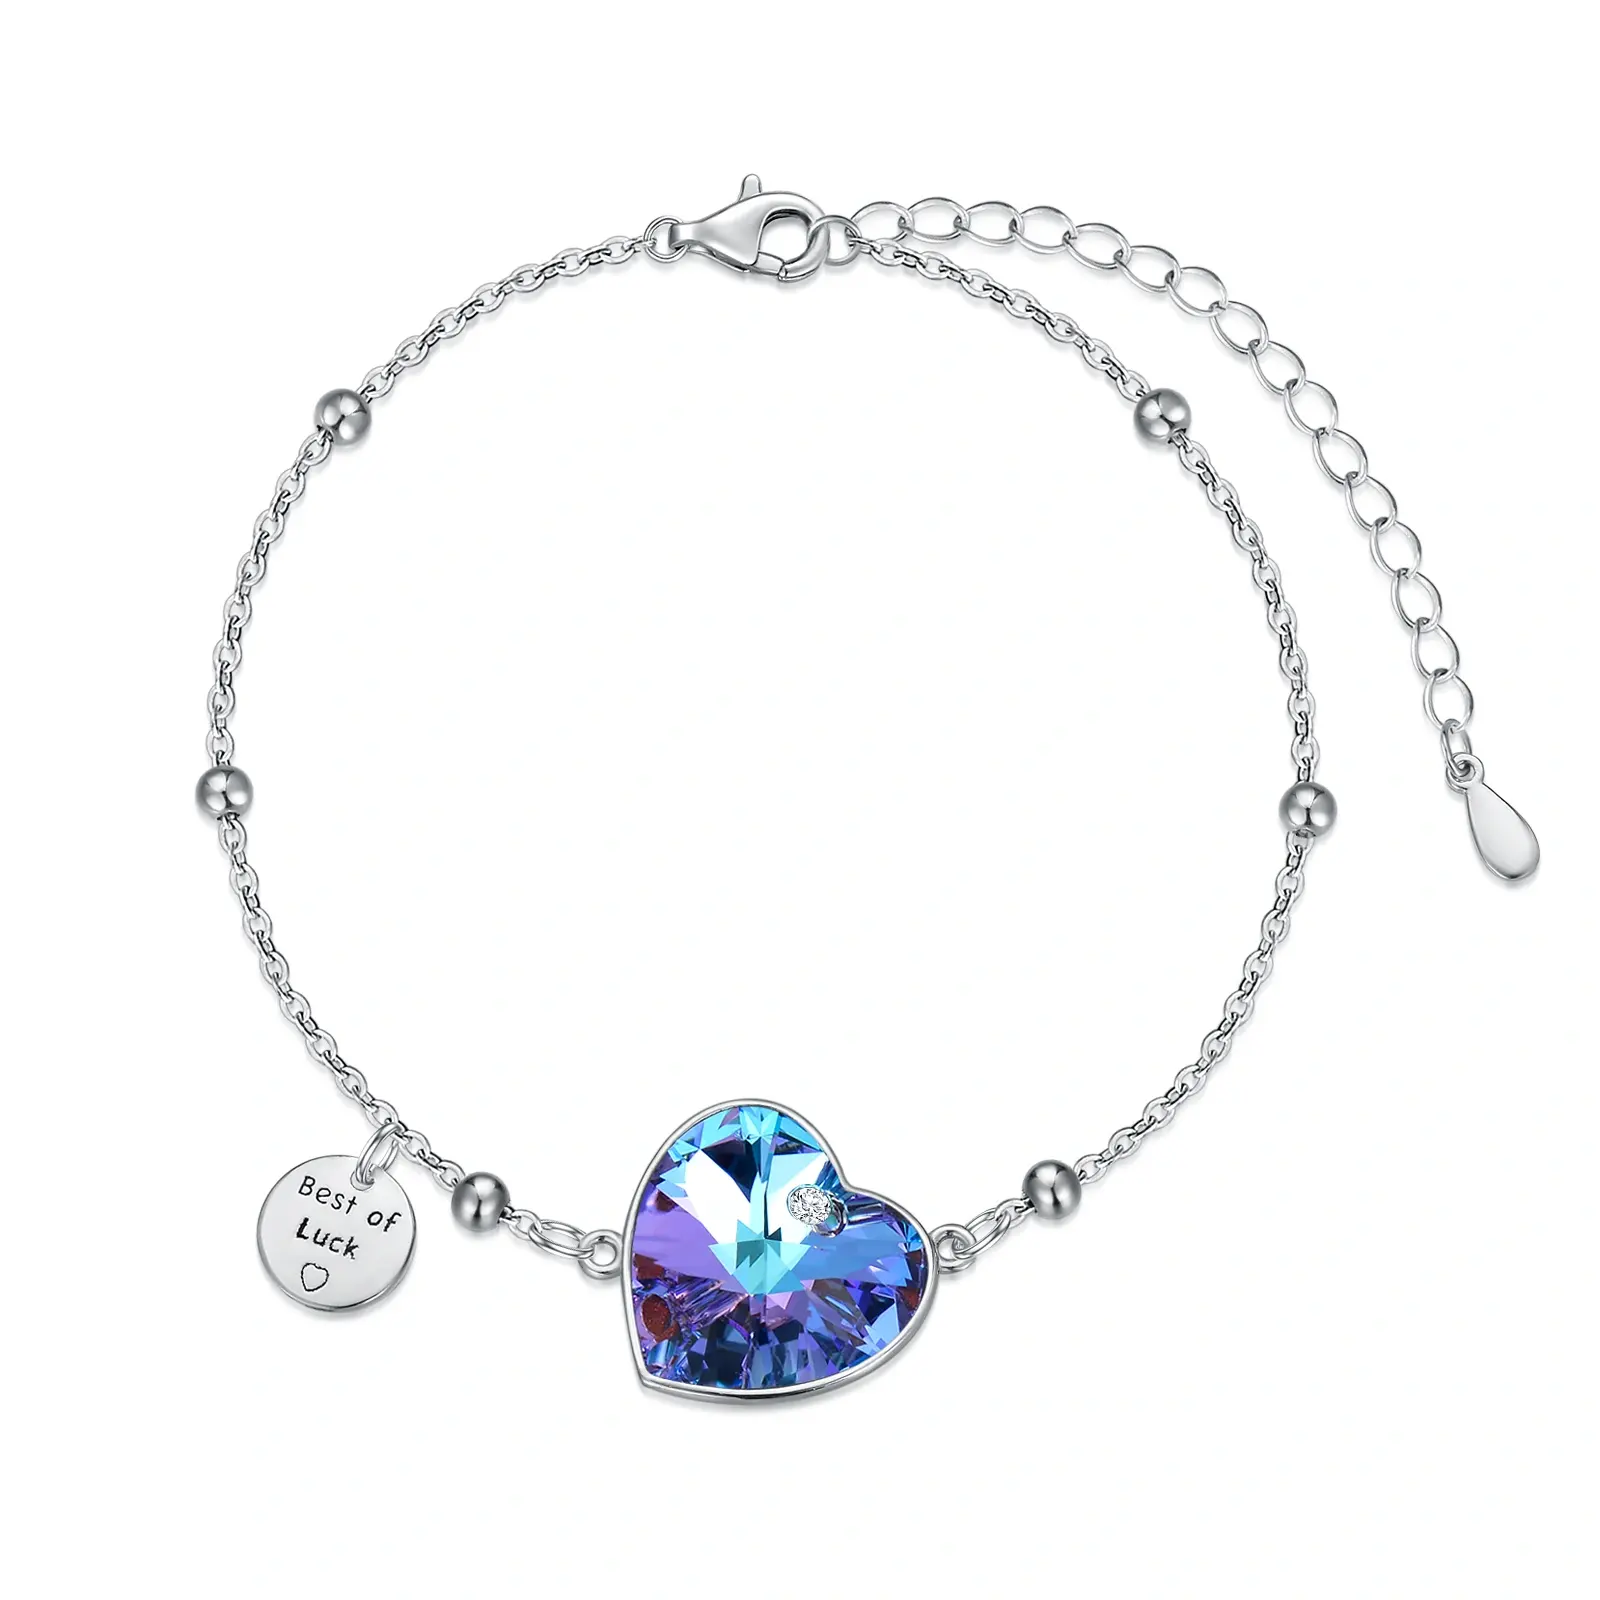 Best Of Luck Blue Heart Beads Bracelets 925 Sterling Silver Crystal Bracelets Fashion Jewelry Gifts For Women Girls